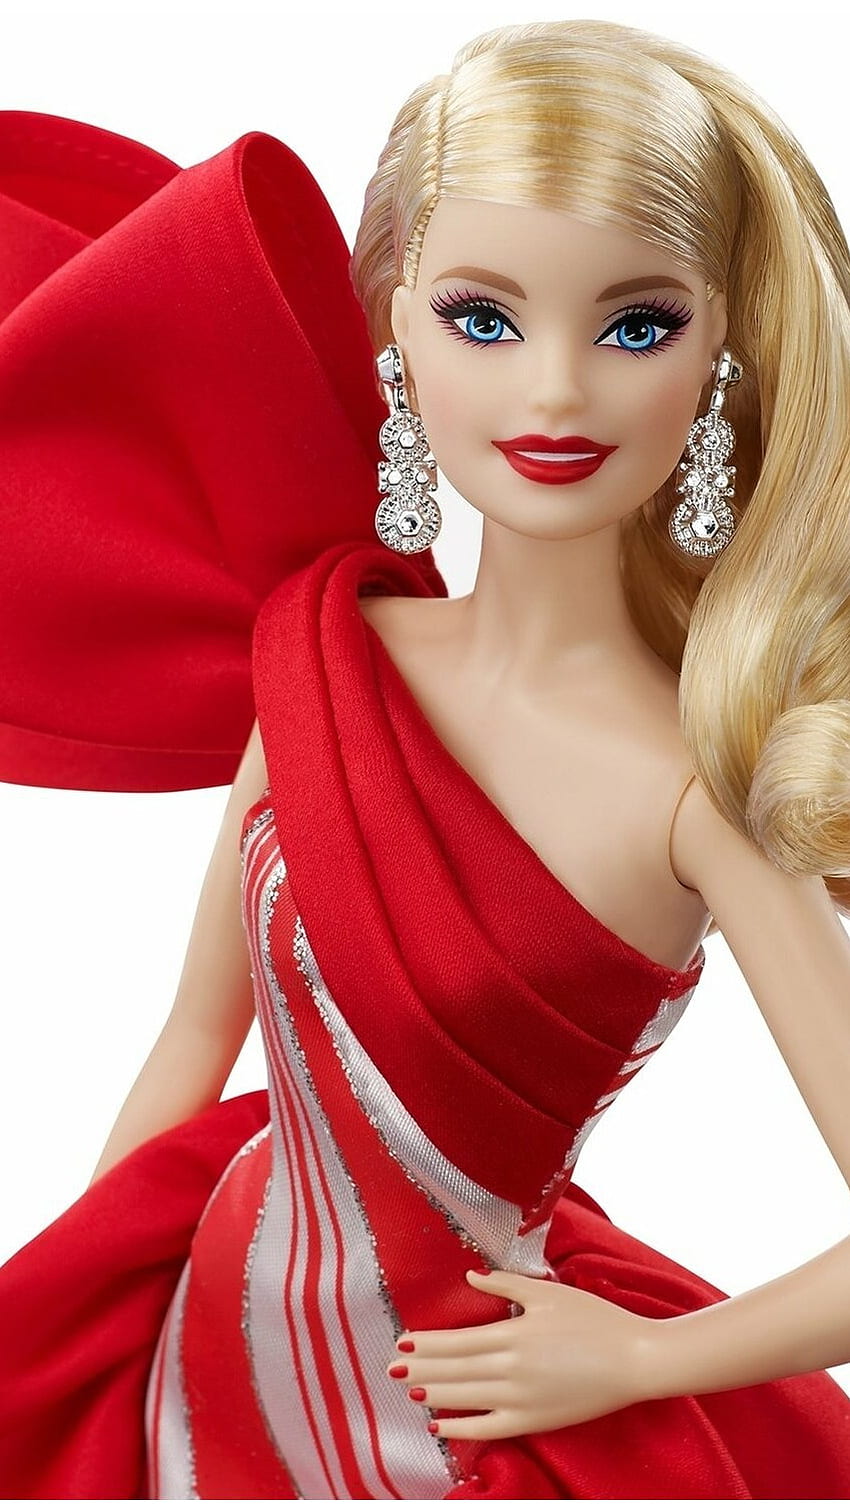 Muñeca Barbie, Muñeca De Moda fondo de pantalla del teléfono